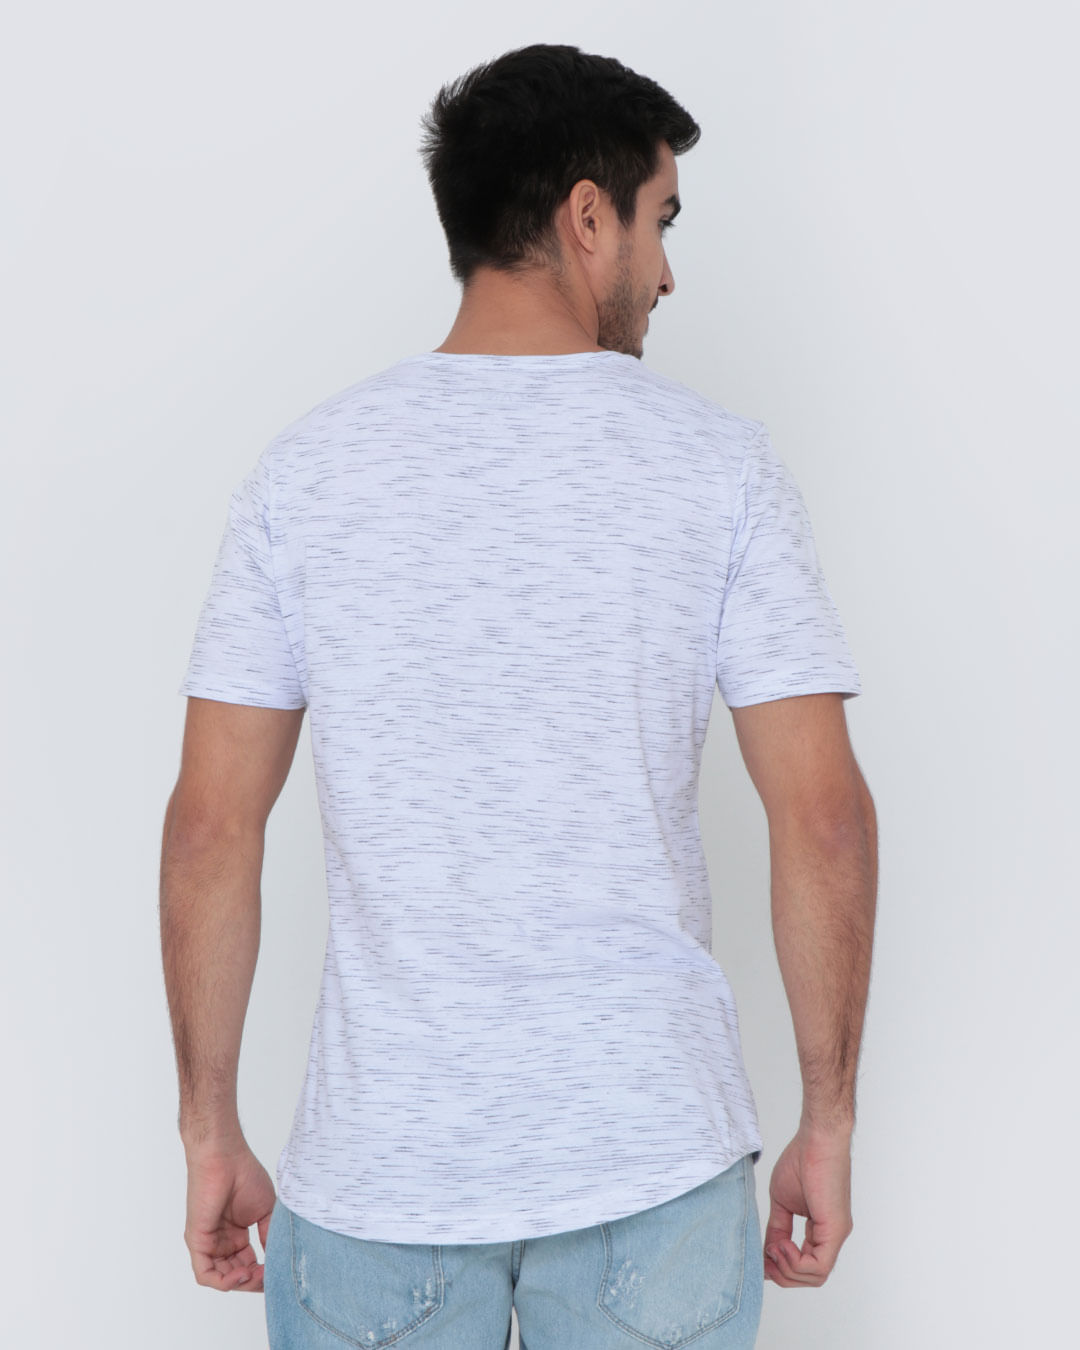 Camiseta-3752-Fashion---Branco